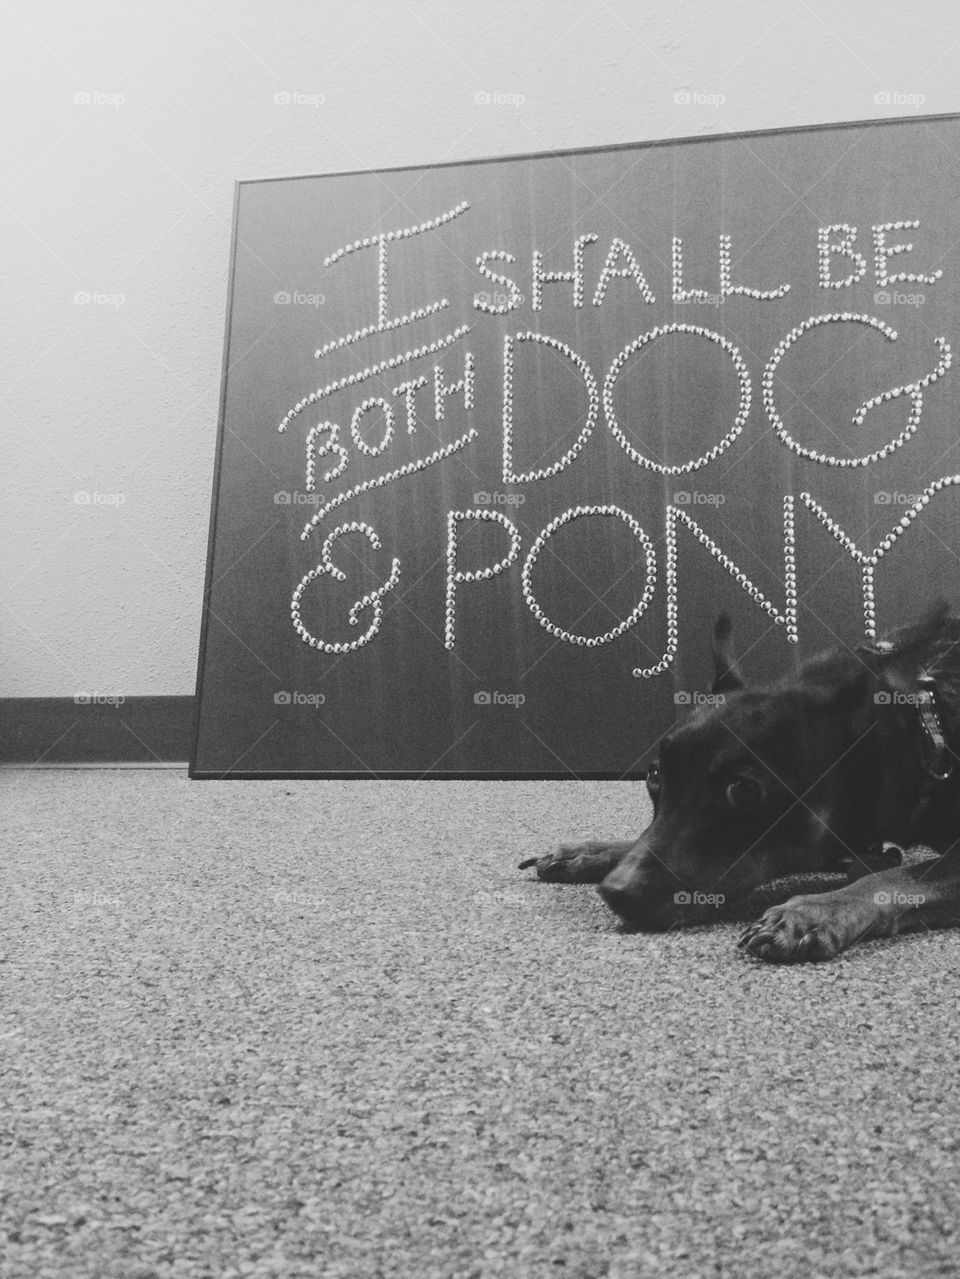 Dog and pony